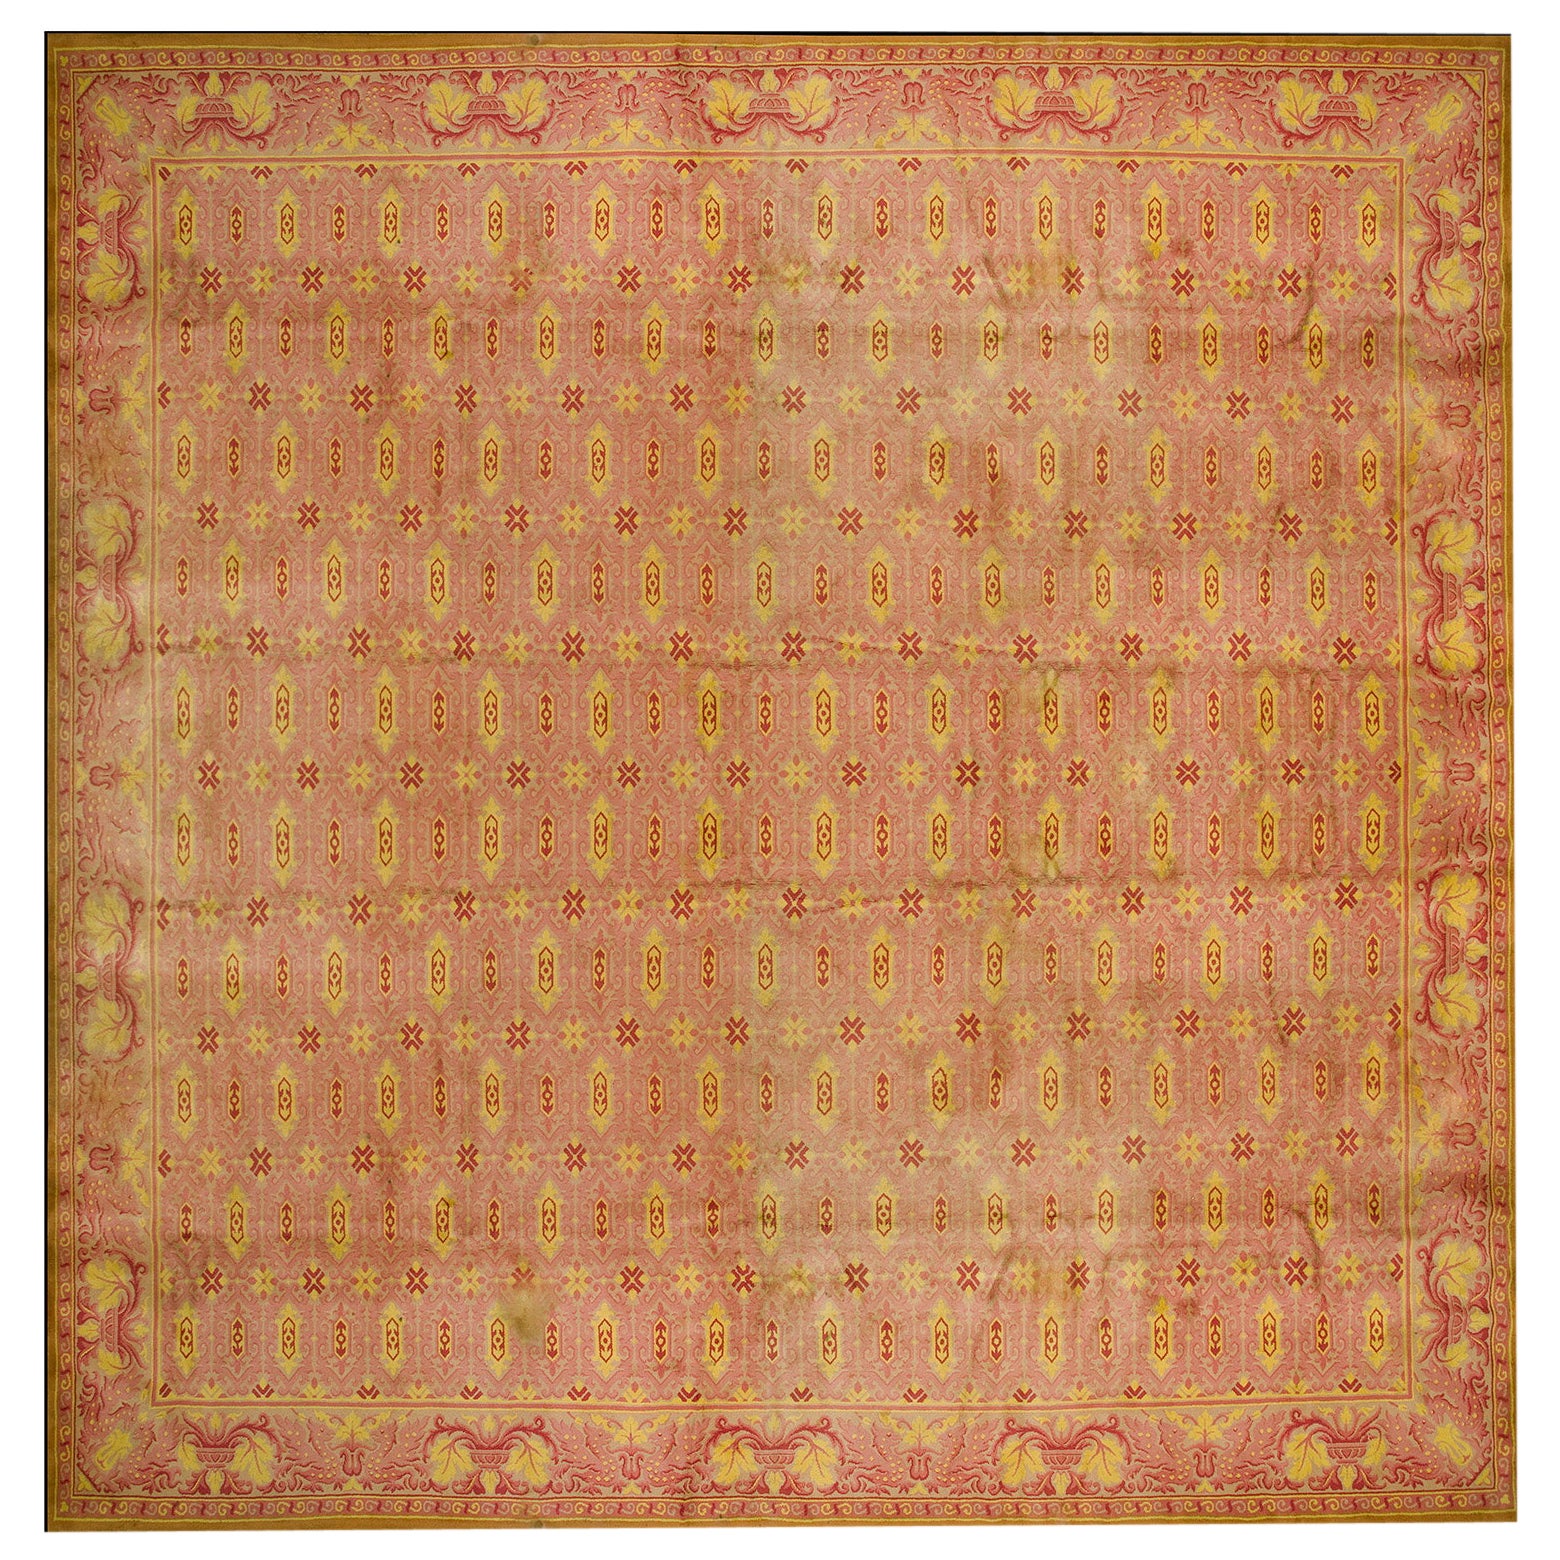 Early 20th Century Austrian Savonnerie Carpet ( 19'10'' x 20'8'' - 605 x 630 )